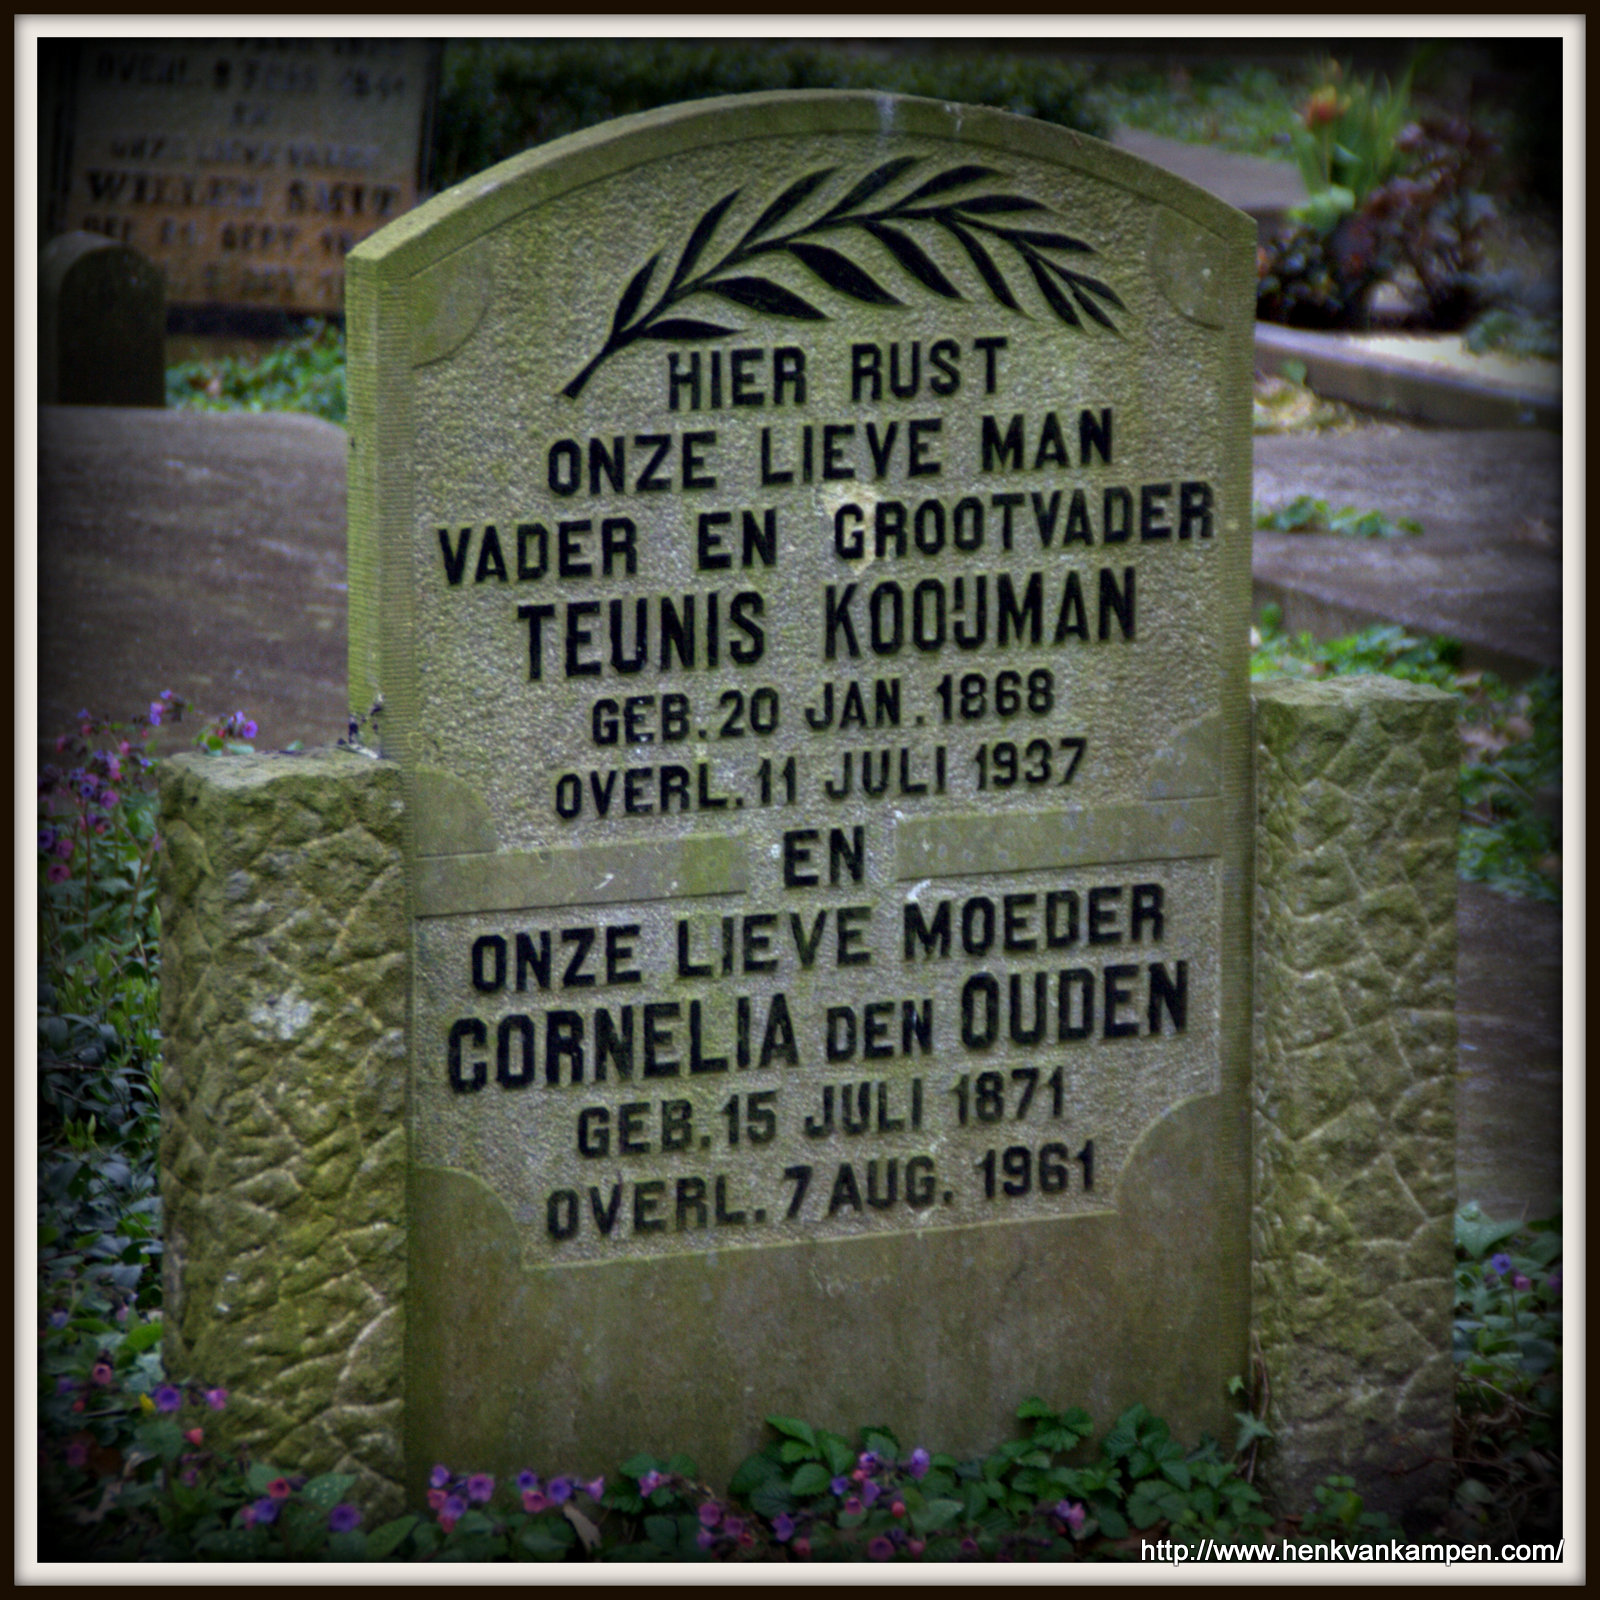 Kooijman - den Ouden tombstone, Kerkveld cemetery, Nieuwegein